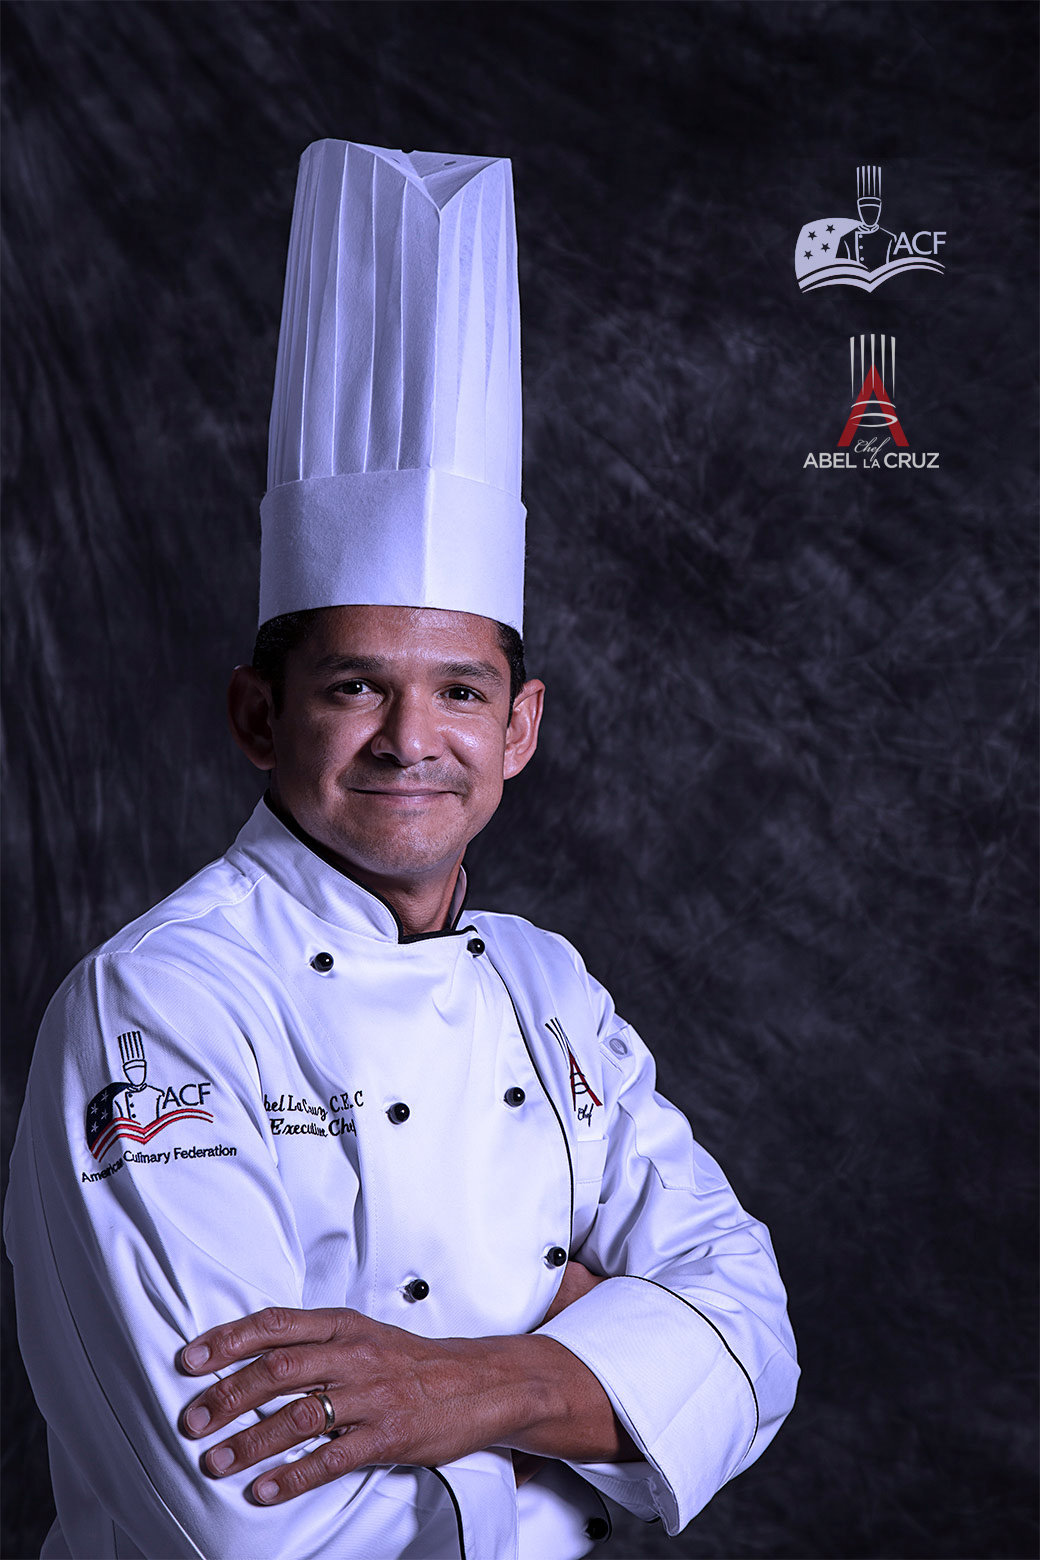 Biography Chef Abel la Cruz